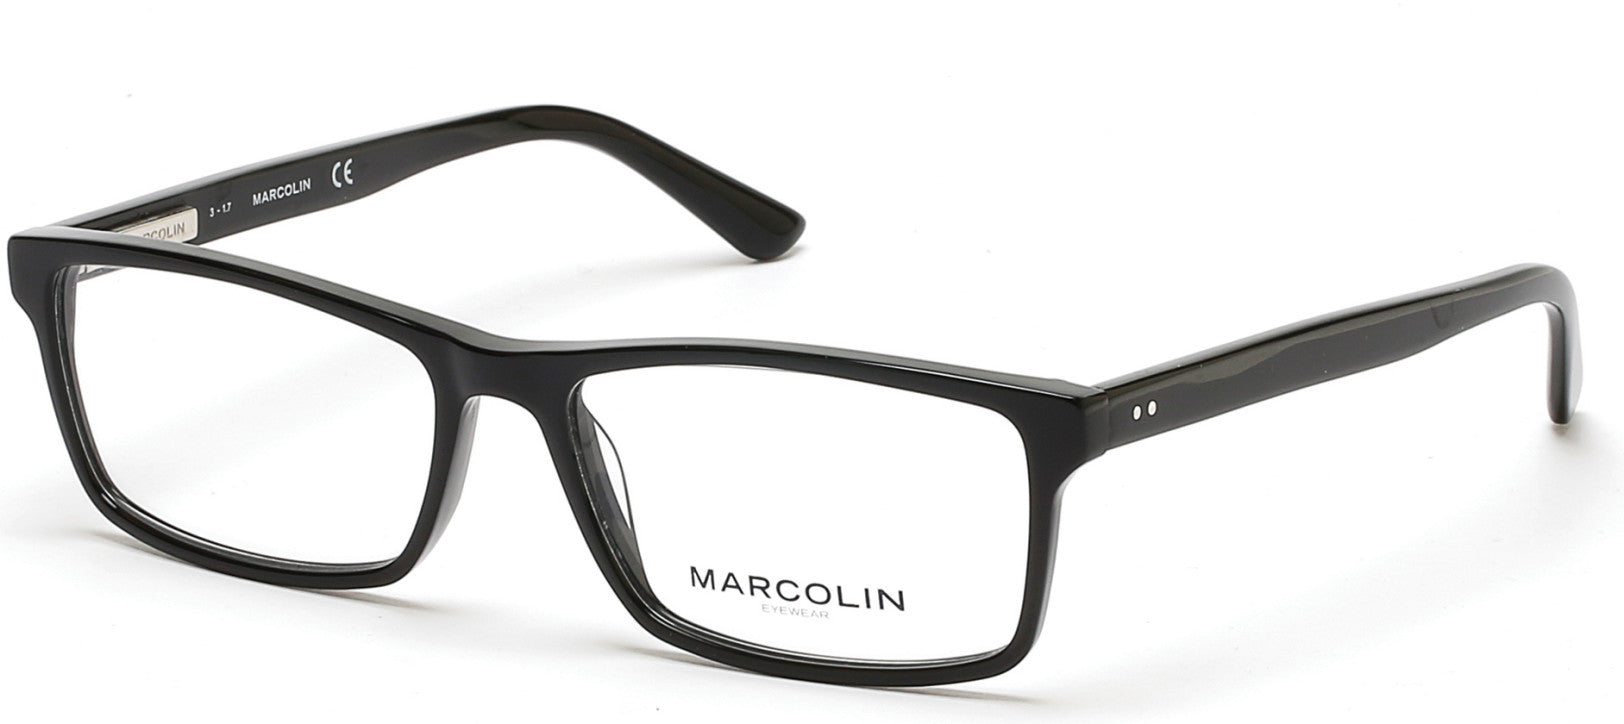 Marcolin MA3008 Eyeglasses 001-001 - Shiny Black